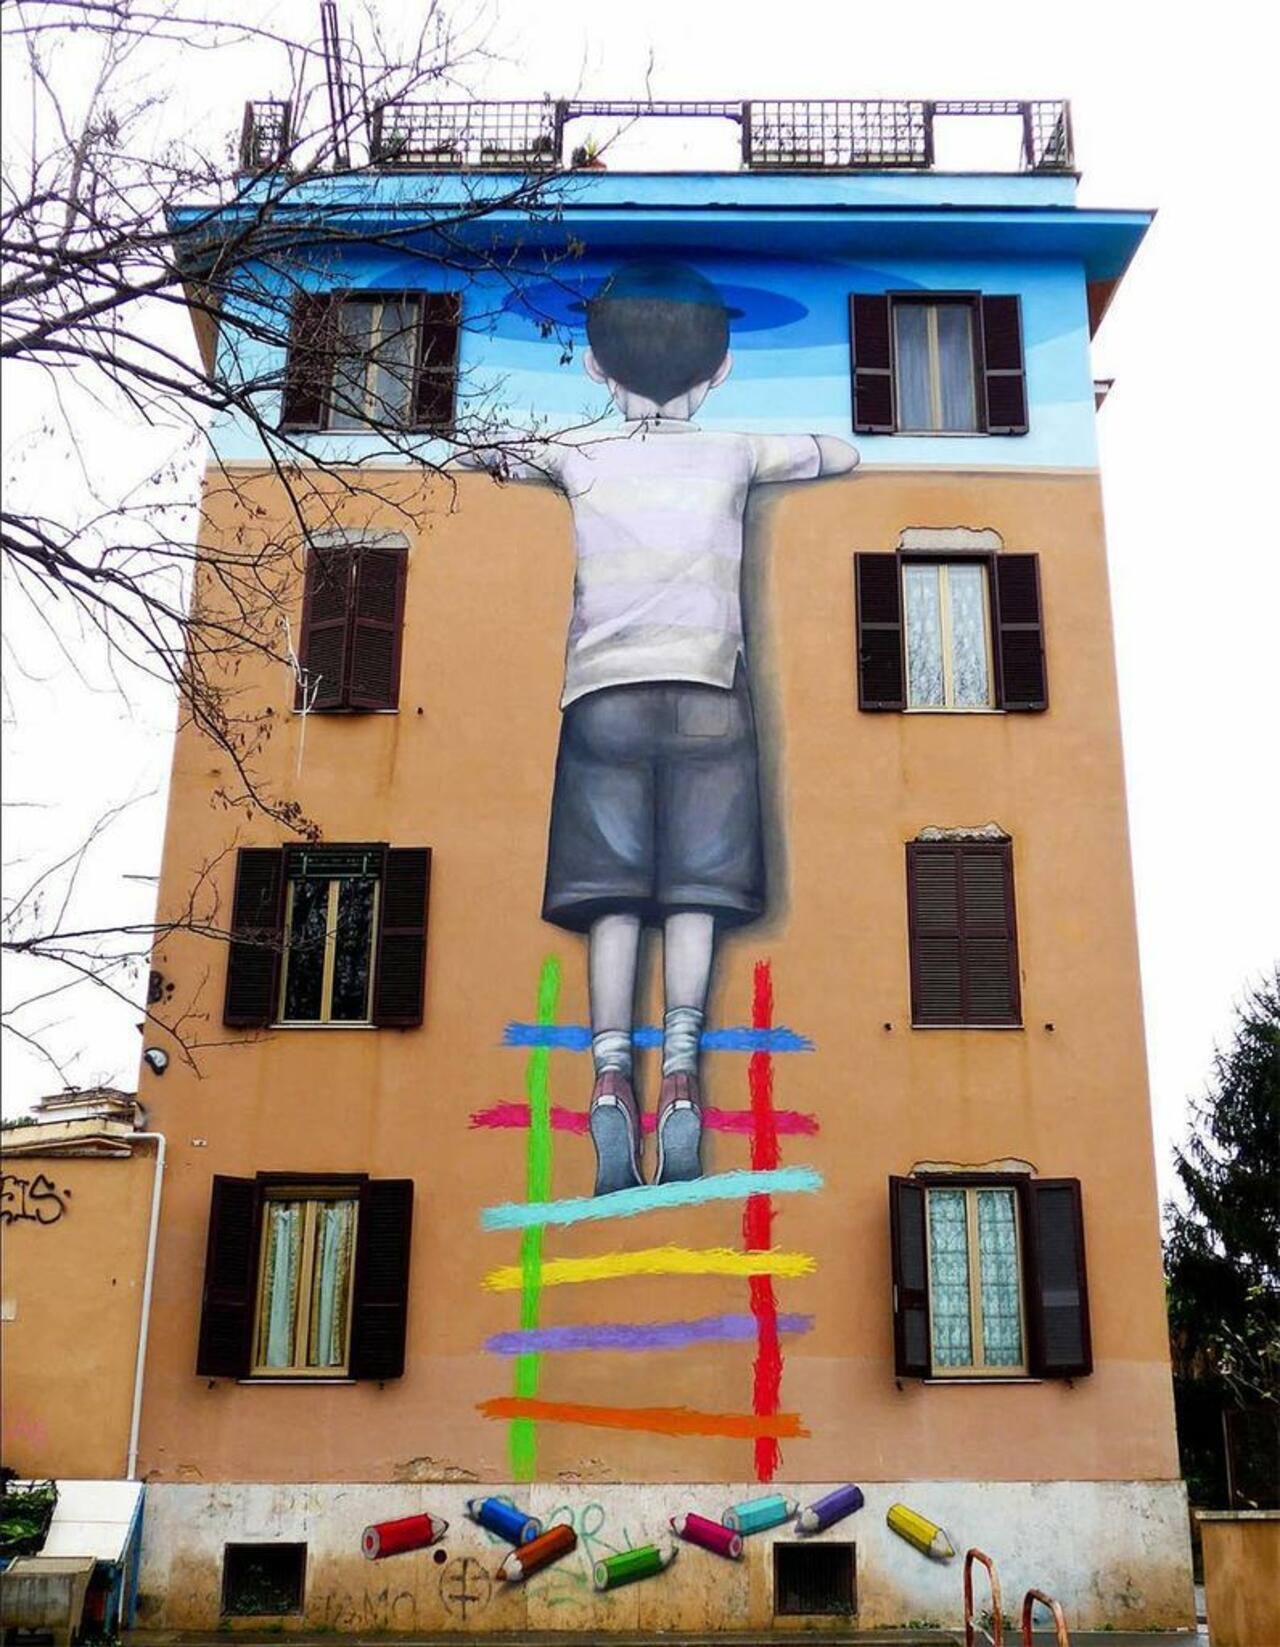 RT @samiaelsaid: #artwork of Seth 
#art #mural #urbanart #walls 
#streetart
#graffiti 

http://www.thisiscolossal.com/2015/03/seth-globepainter-murals/ http://t.co/ol21fgayNH